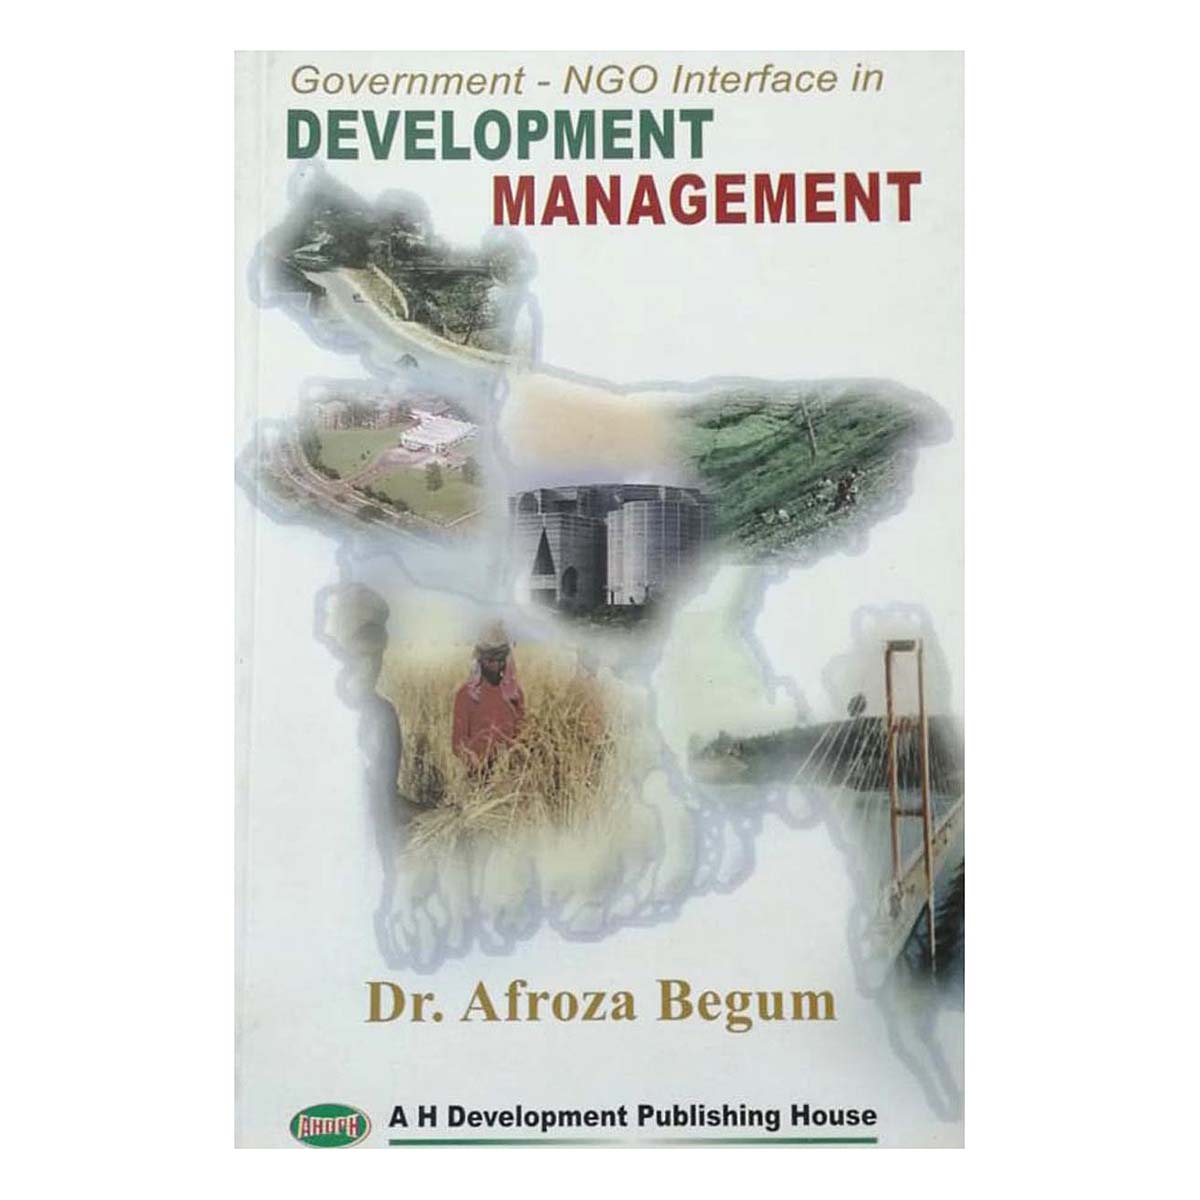 Development Management